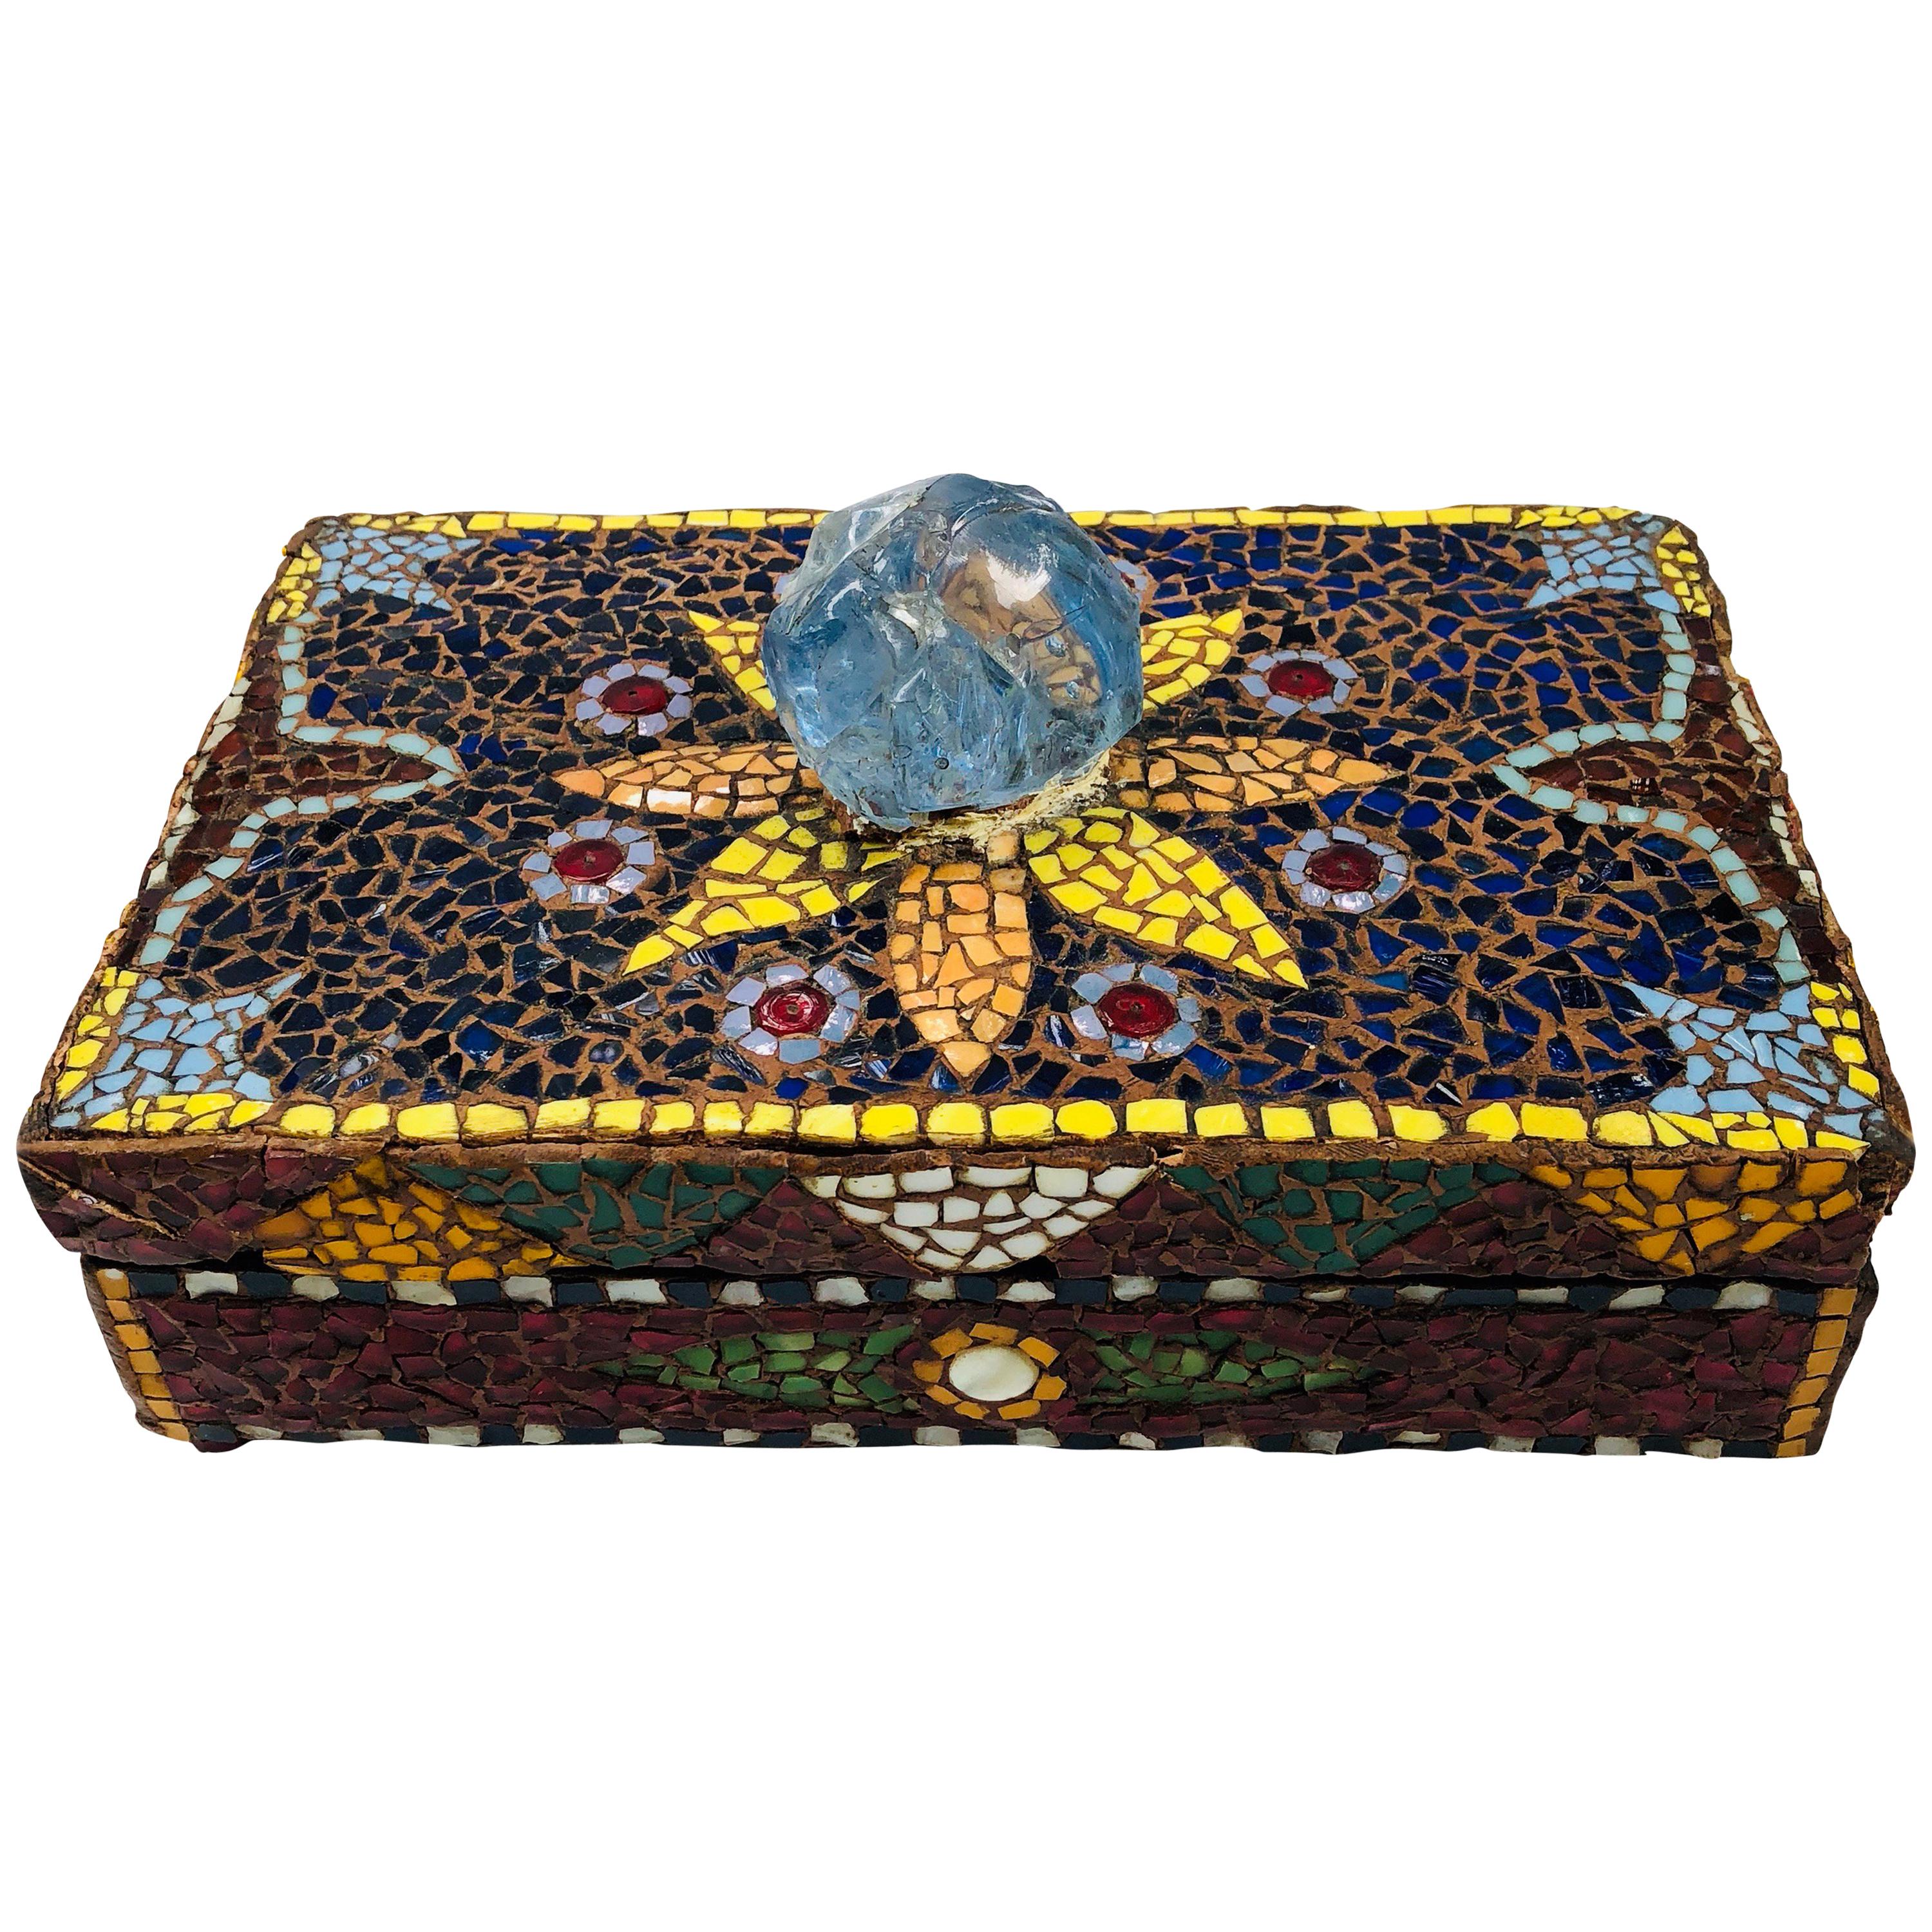 French Pique Assiette Mosaic Box For Sale